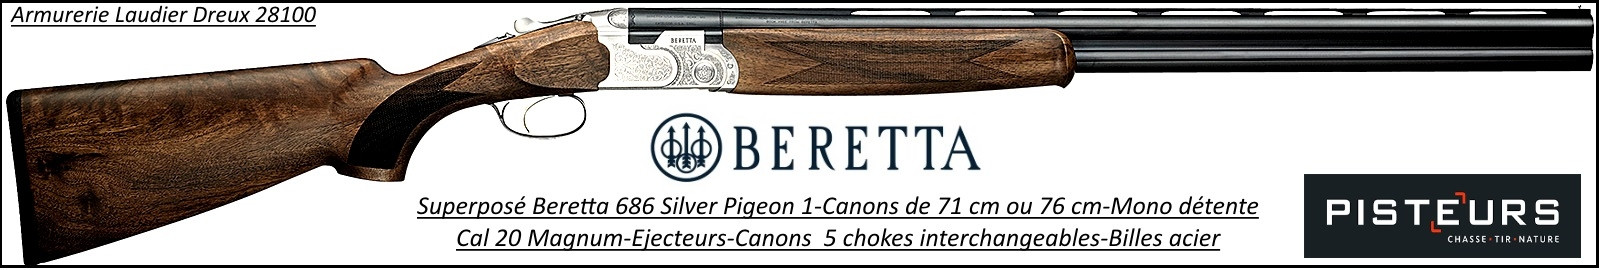 Superposé Beretta 686 Silver Pigeon 1 Calibre 20 mag Canons 71 cm chasse -Promotion-Ref 23112-37587